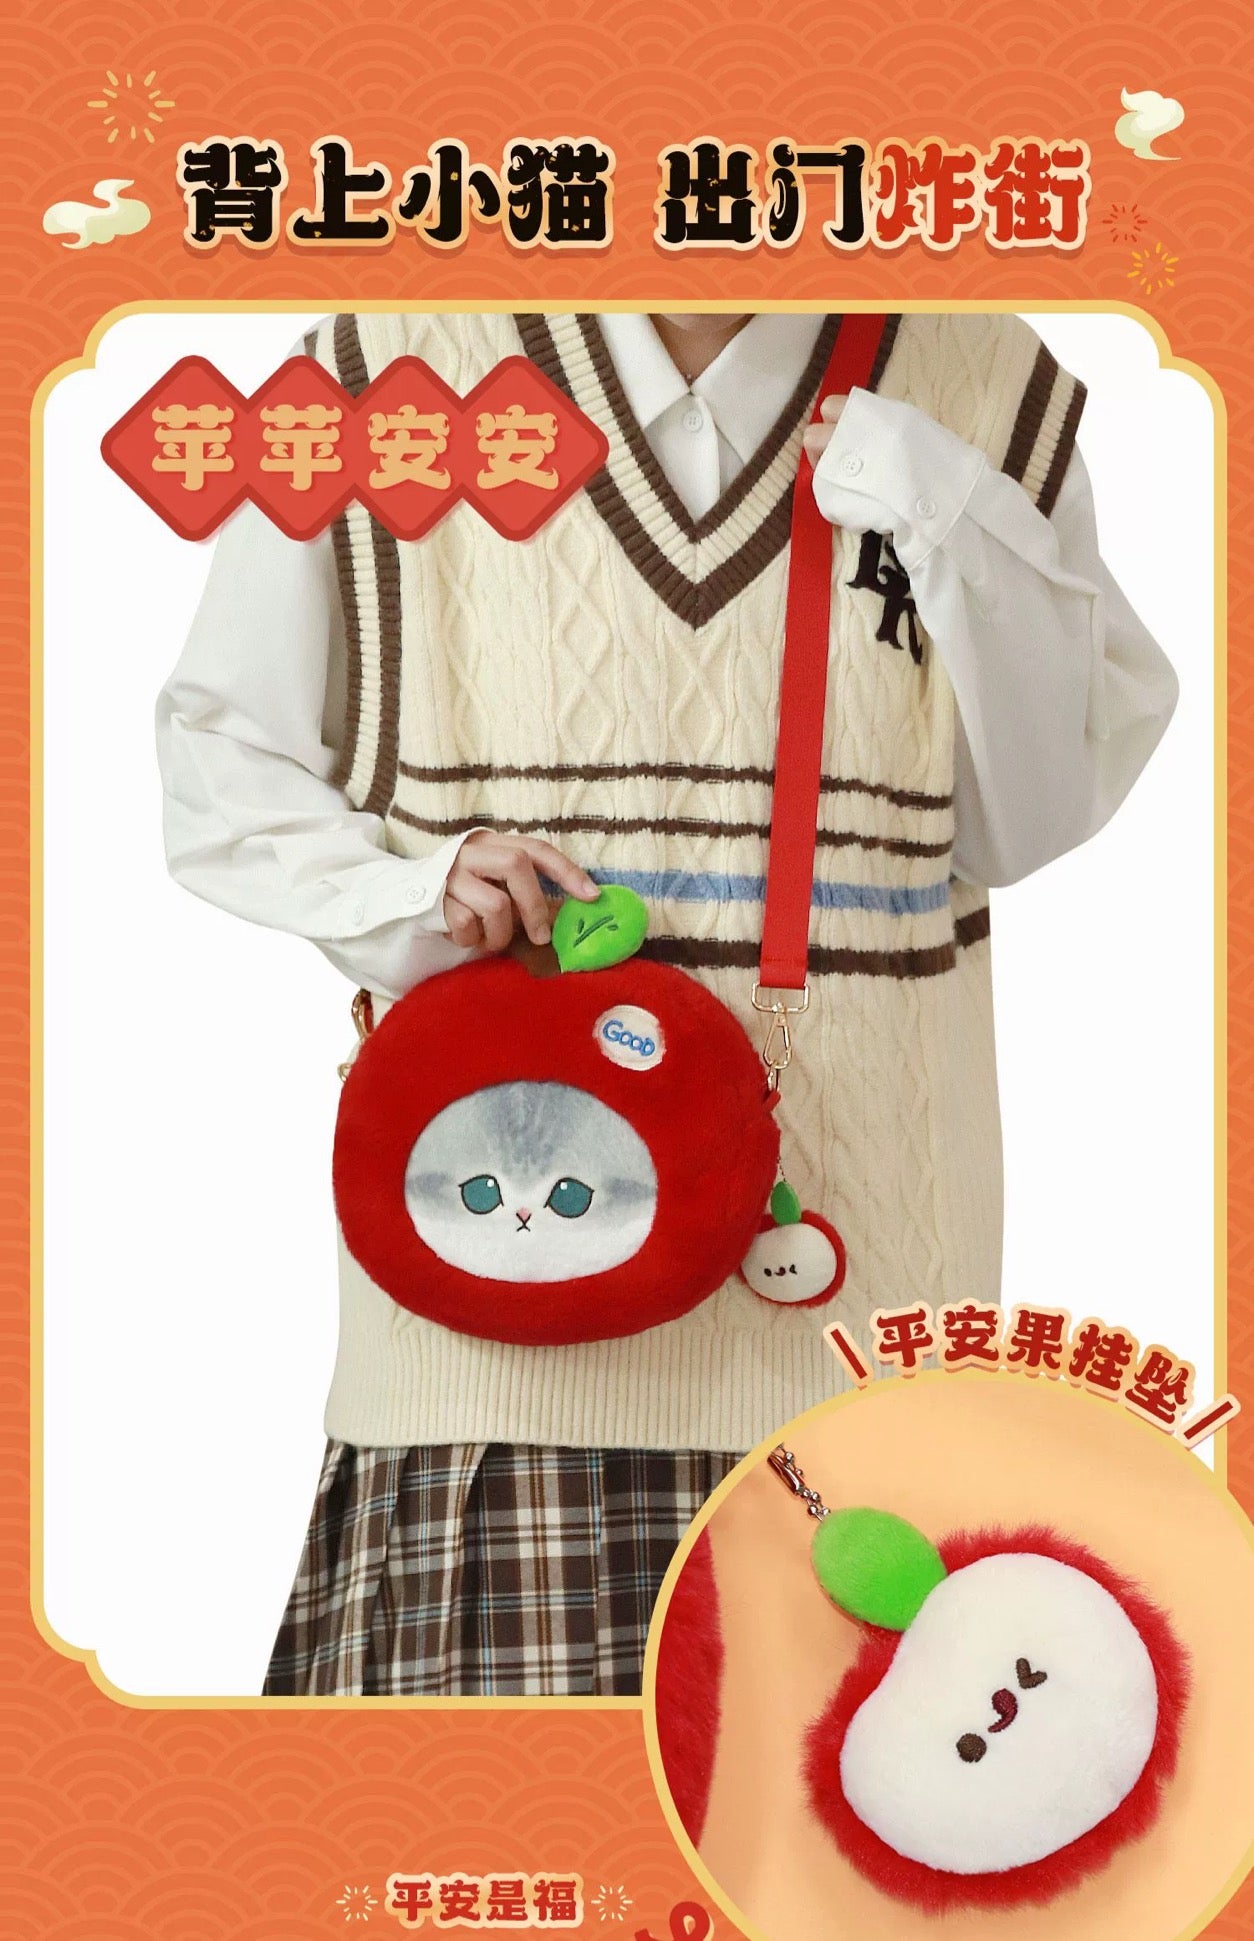 Japan Artist Mofusand Cat Neko Plush Shoulder Bag | Apple Persimmon - Mascot Plush Doll